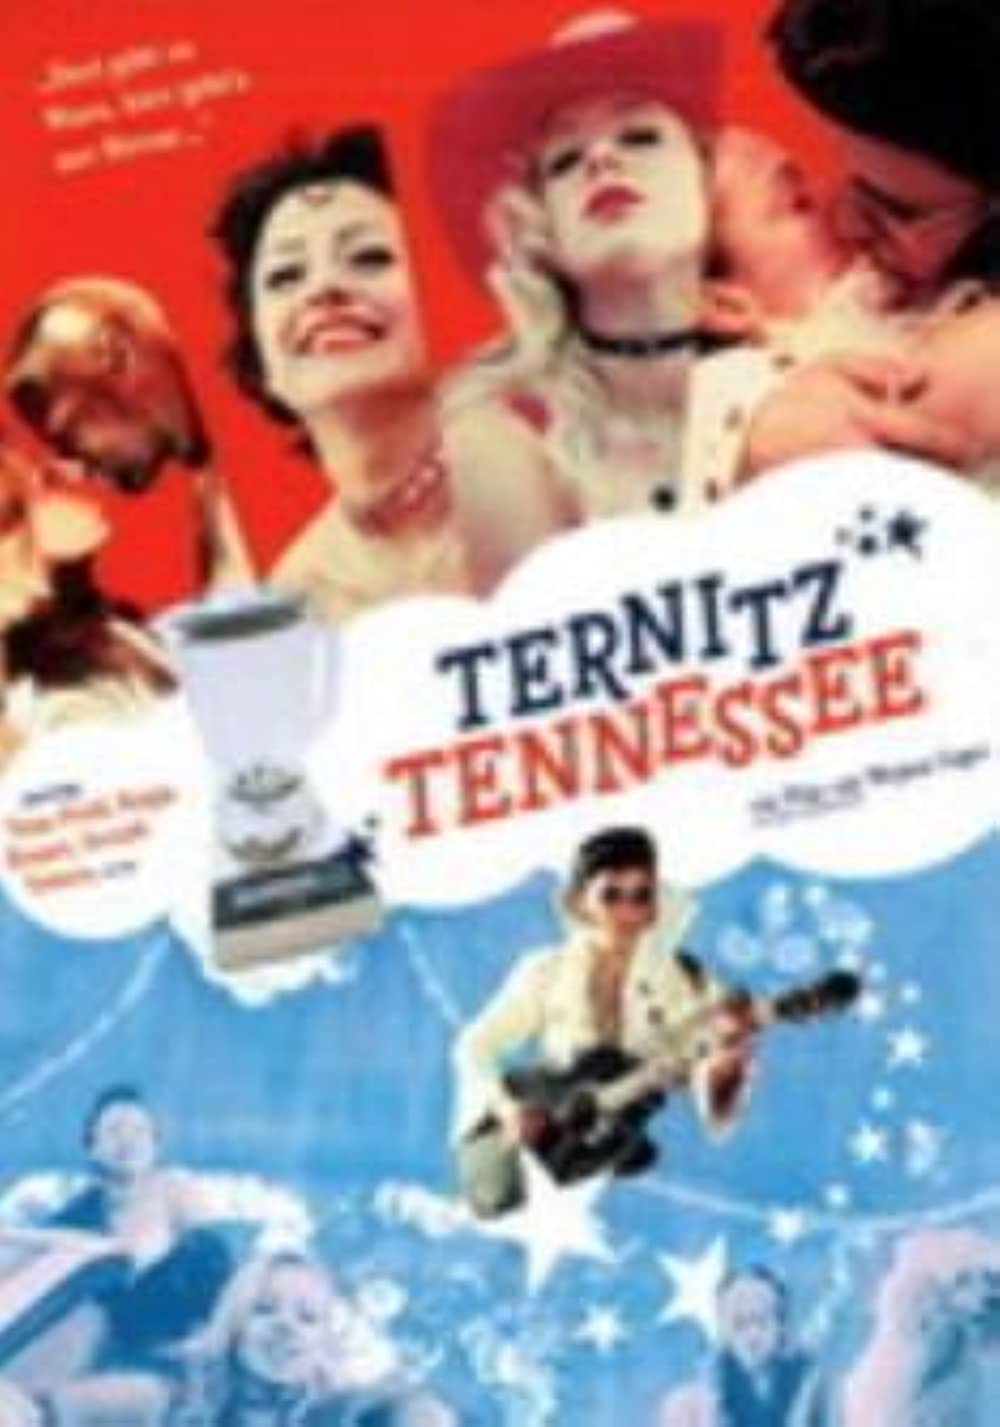 Filmbeschreibung zu Ternitz, Tennessee